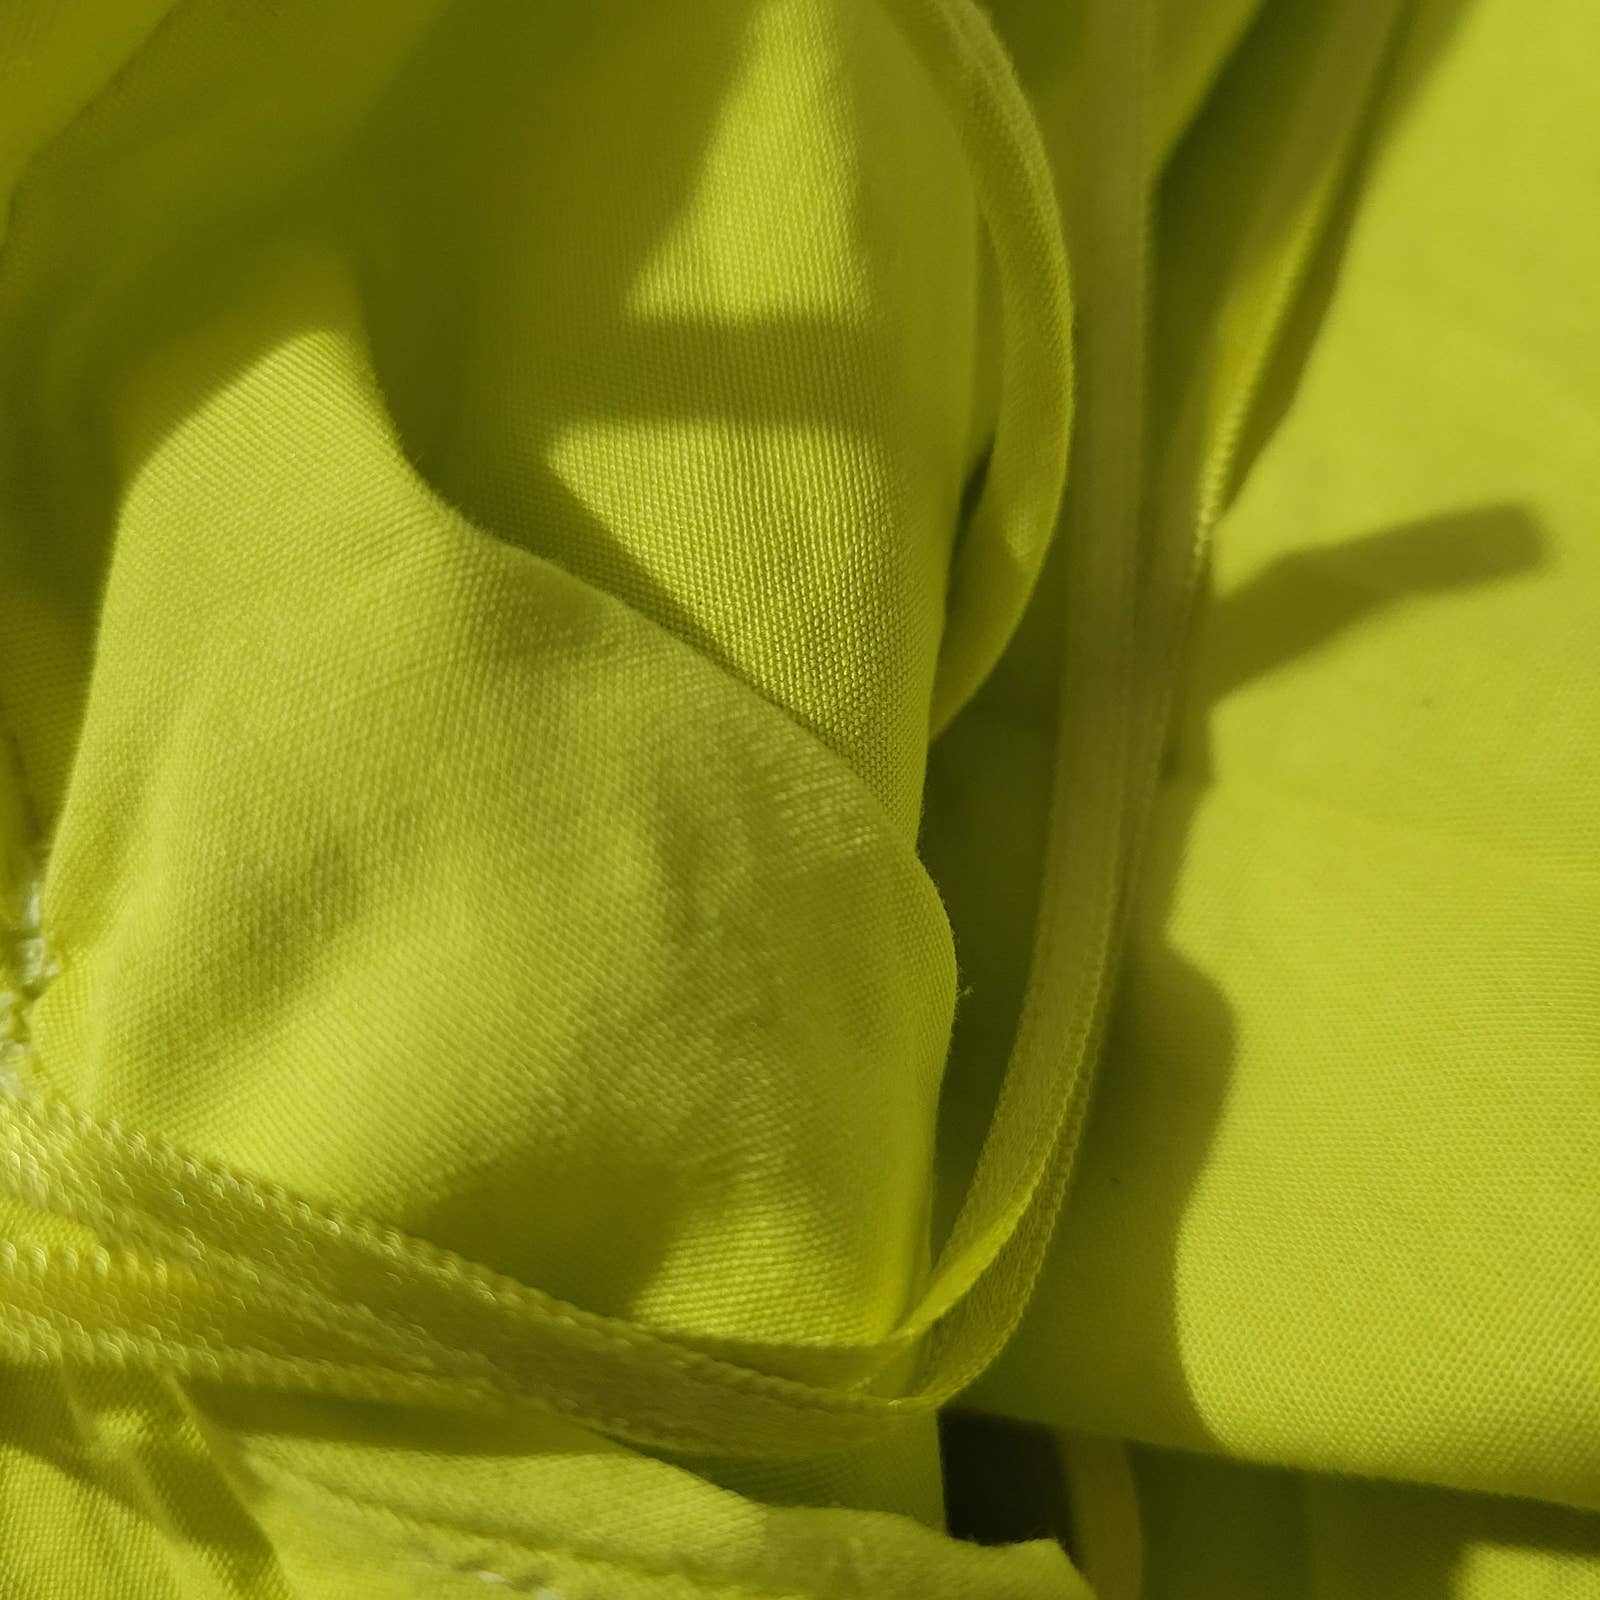 Zara Knotted Dress Yellow Highlighter Neon Poplin Midi Slipdress Draped Asymmetric Size Large